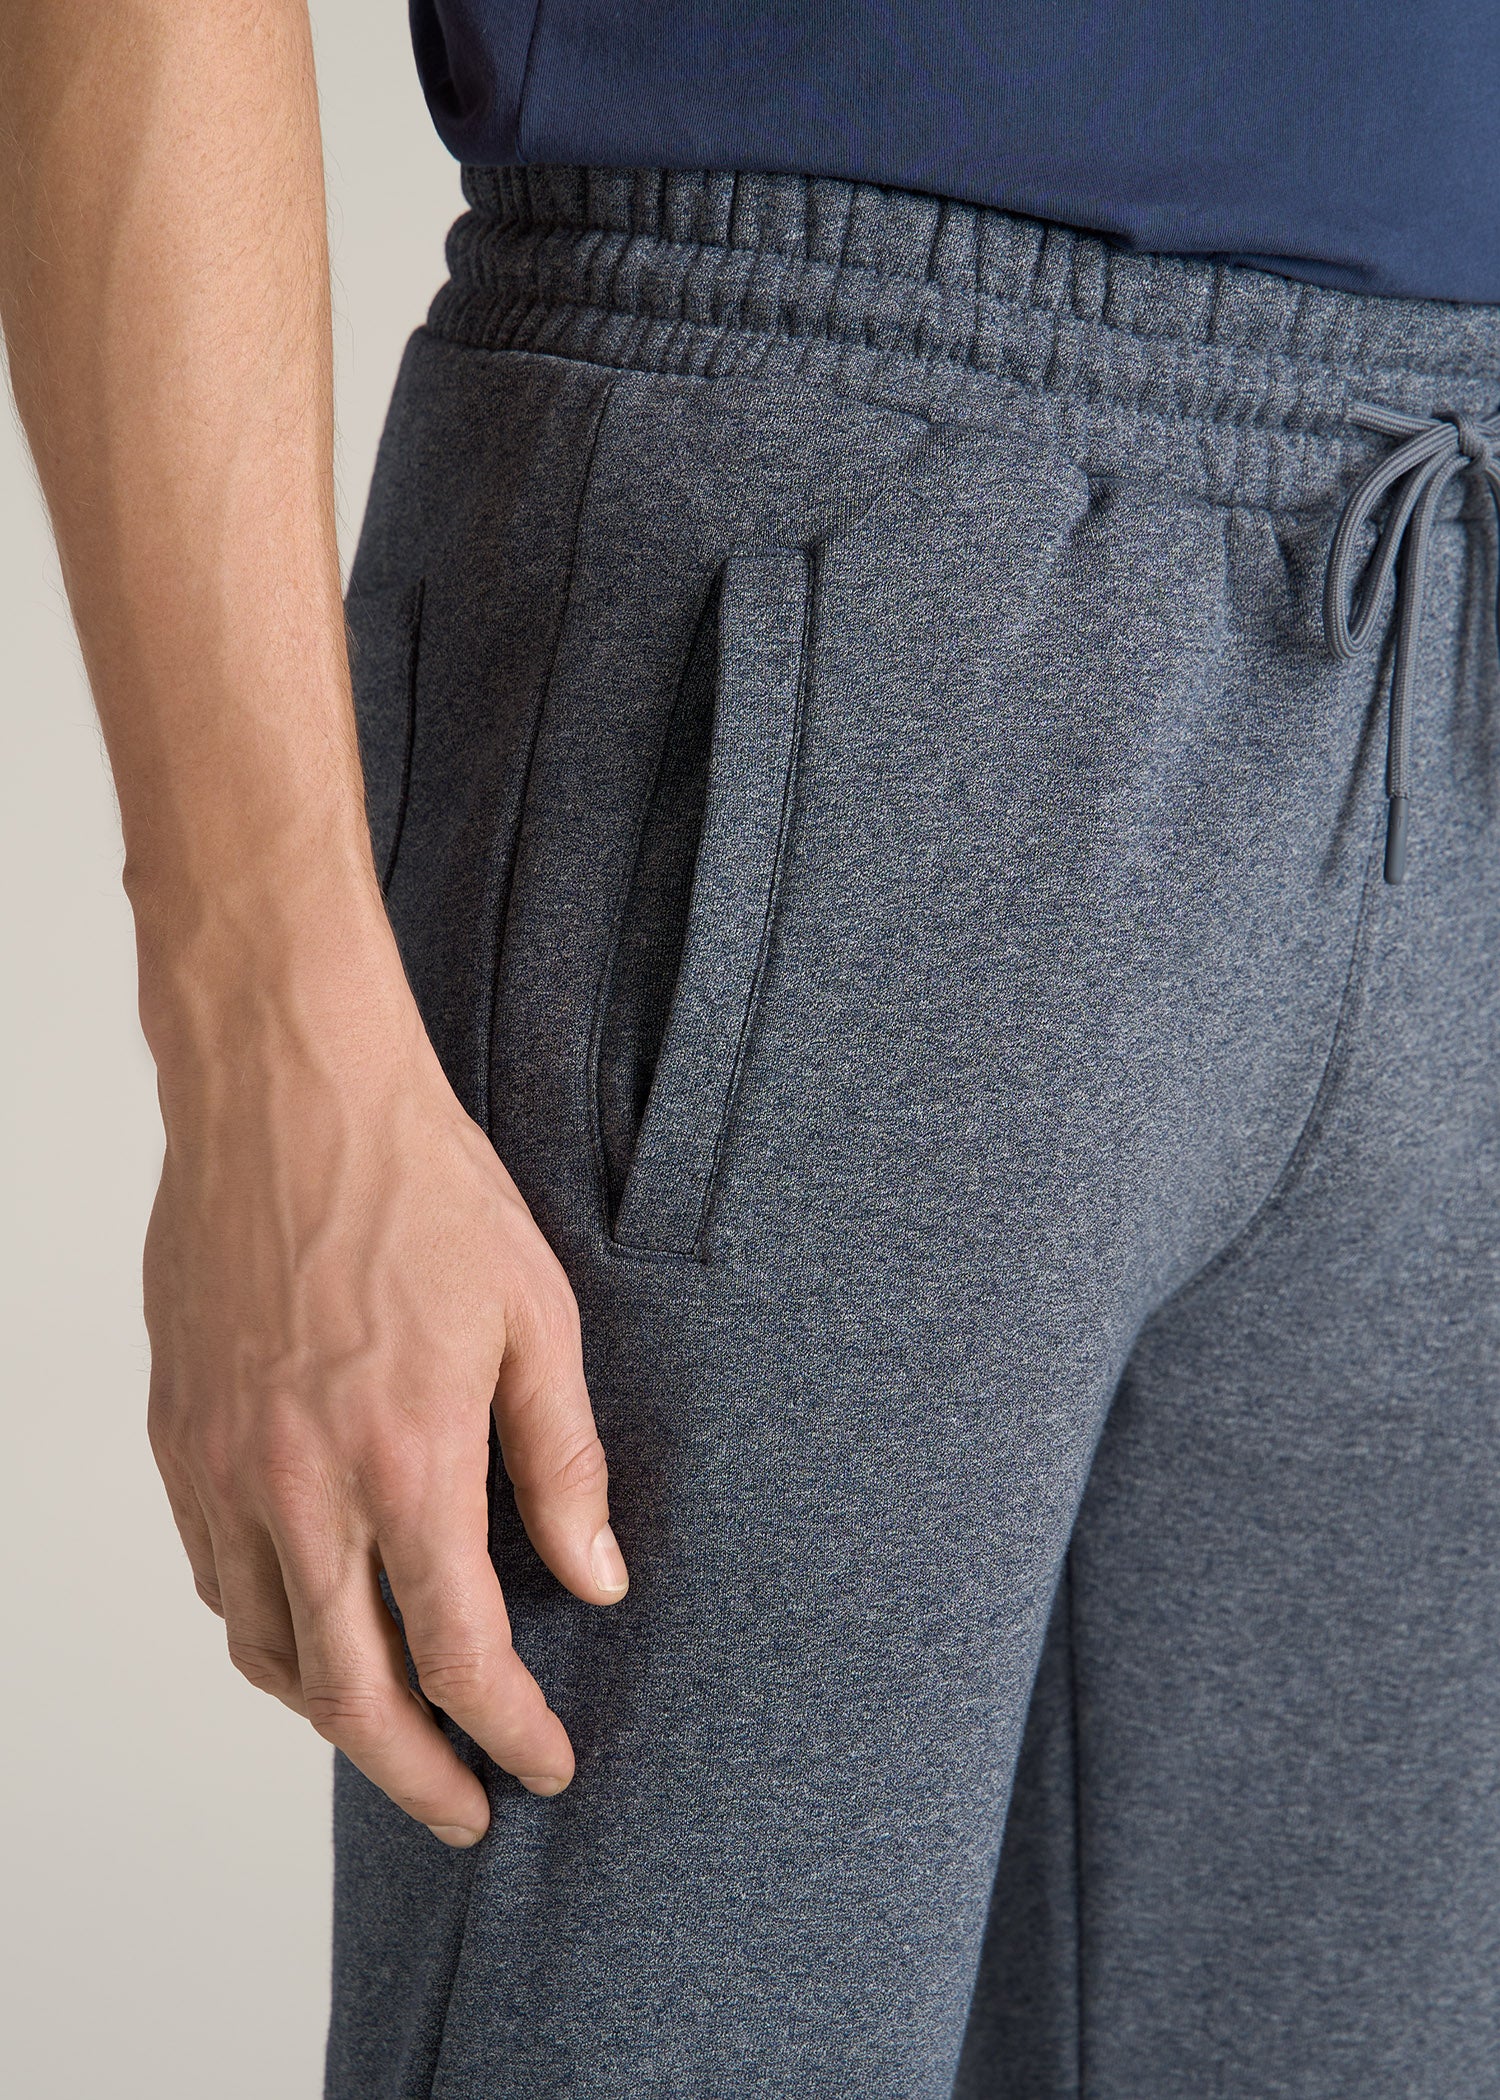 Premium Closed-Bottom Sweatpants with Pockets – Heat Transfer